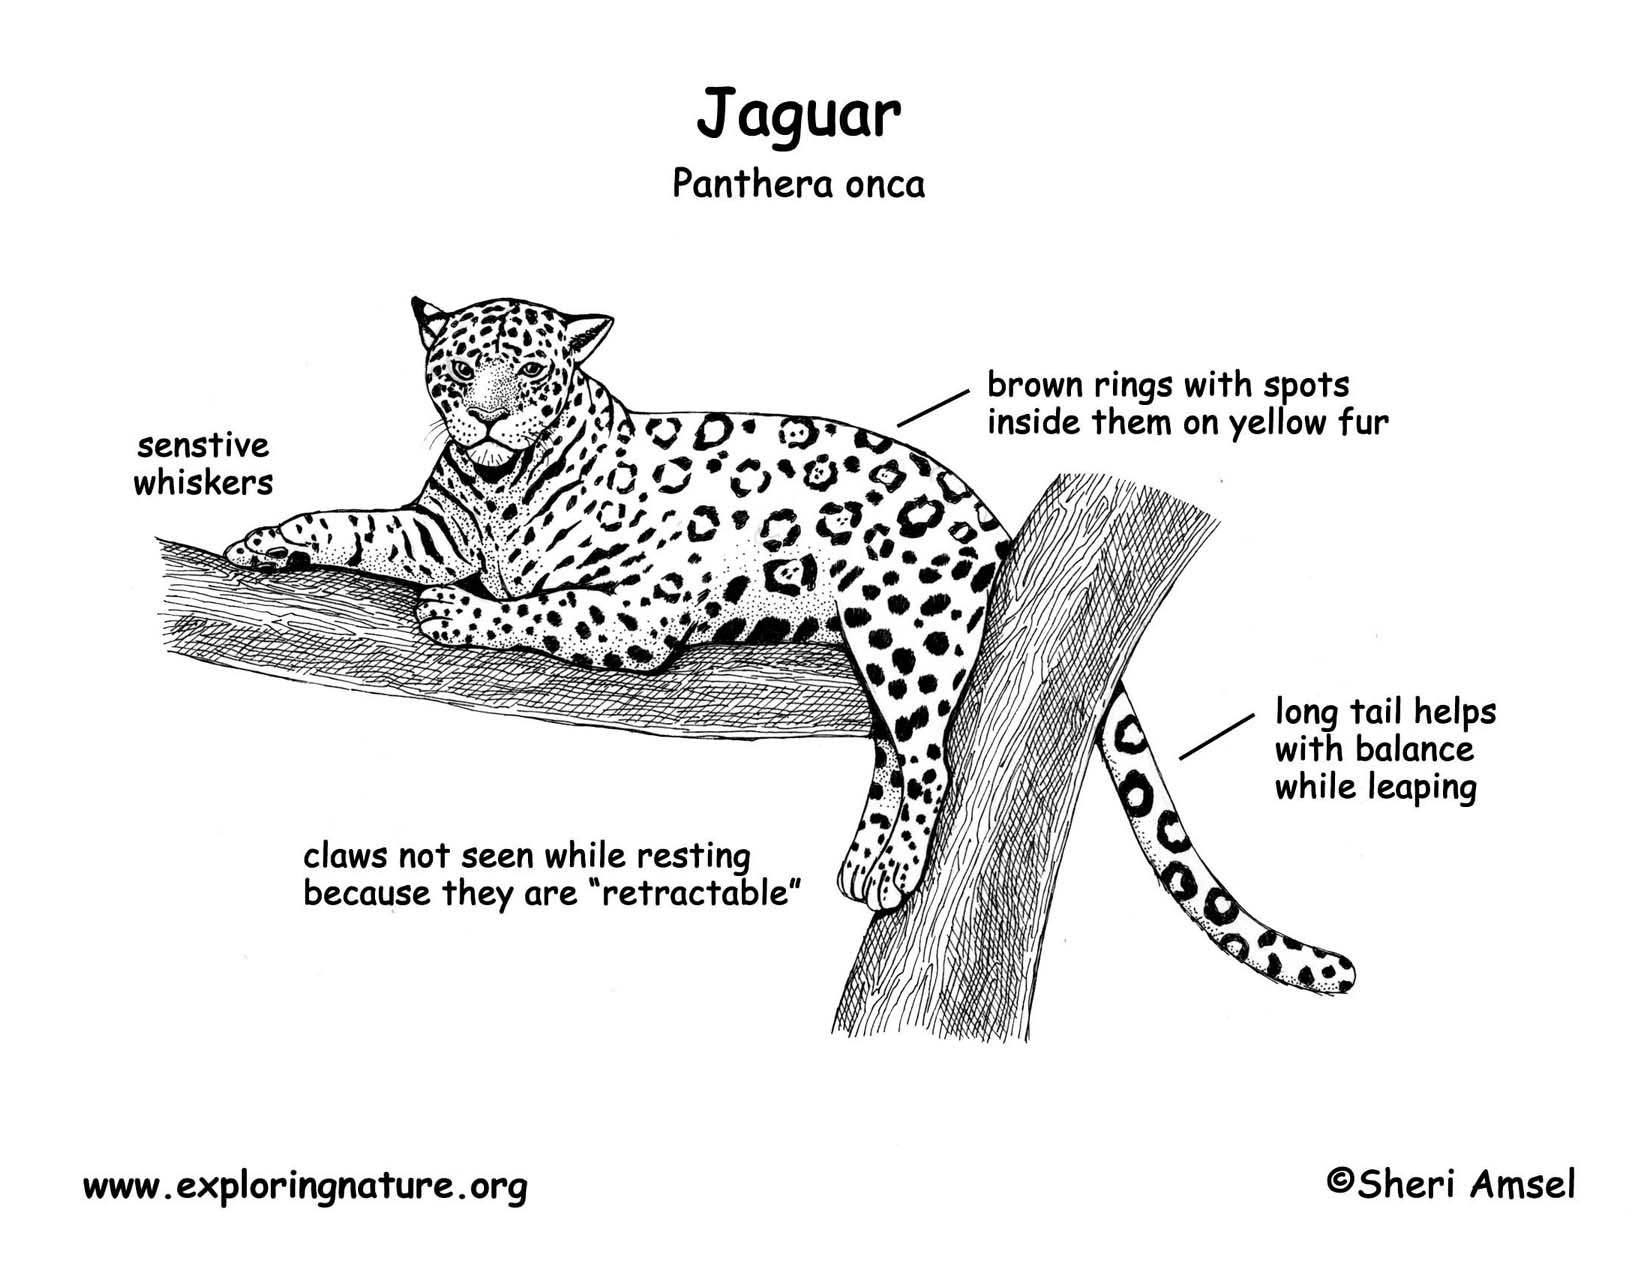 Jaguar Classification Chart